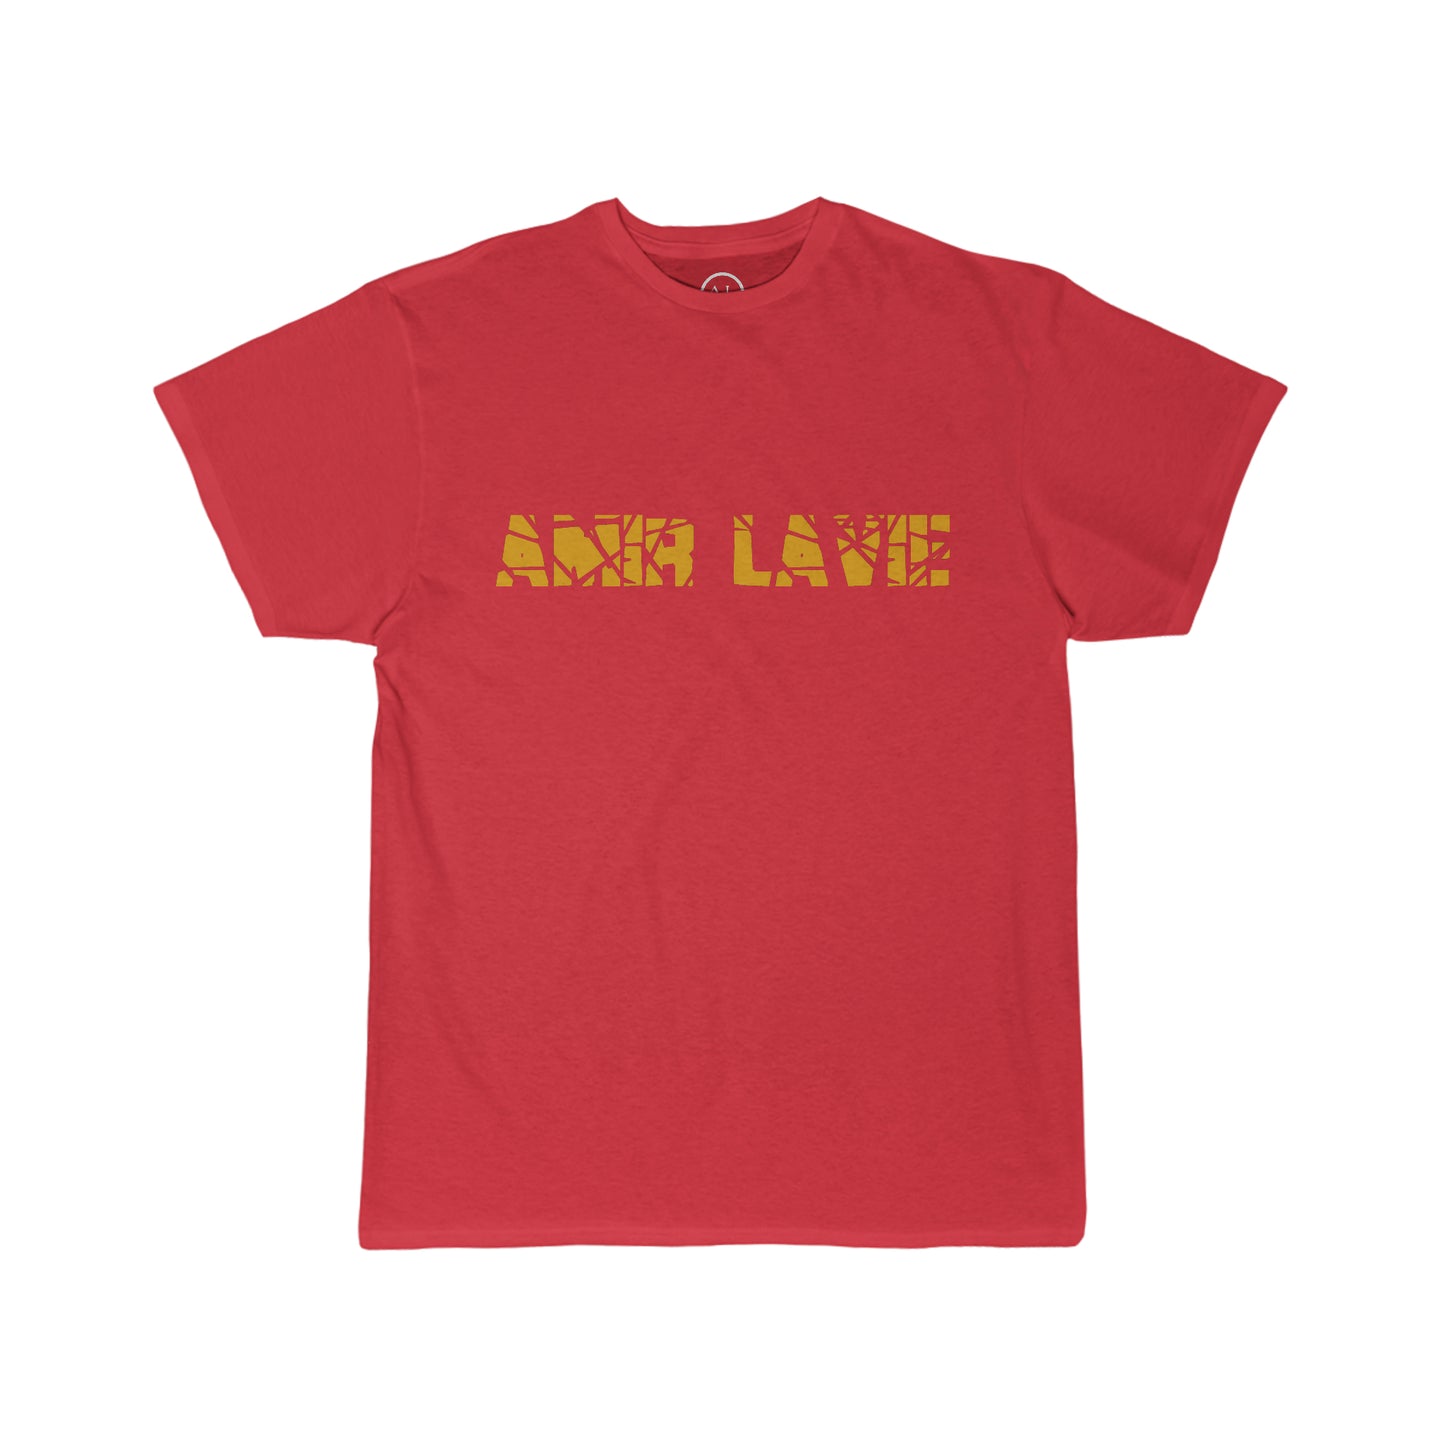 Amir LaVie - Men Tee